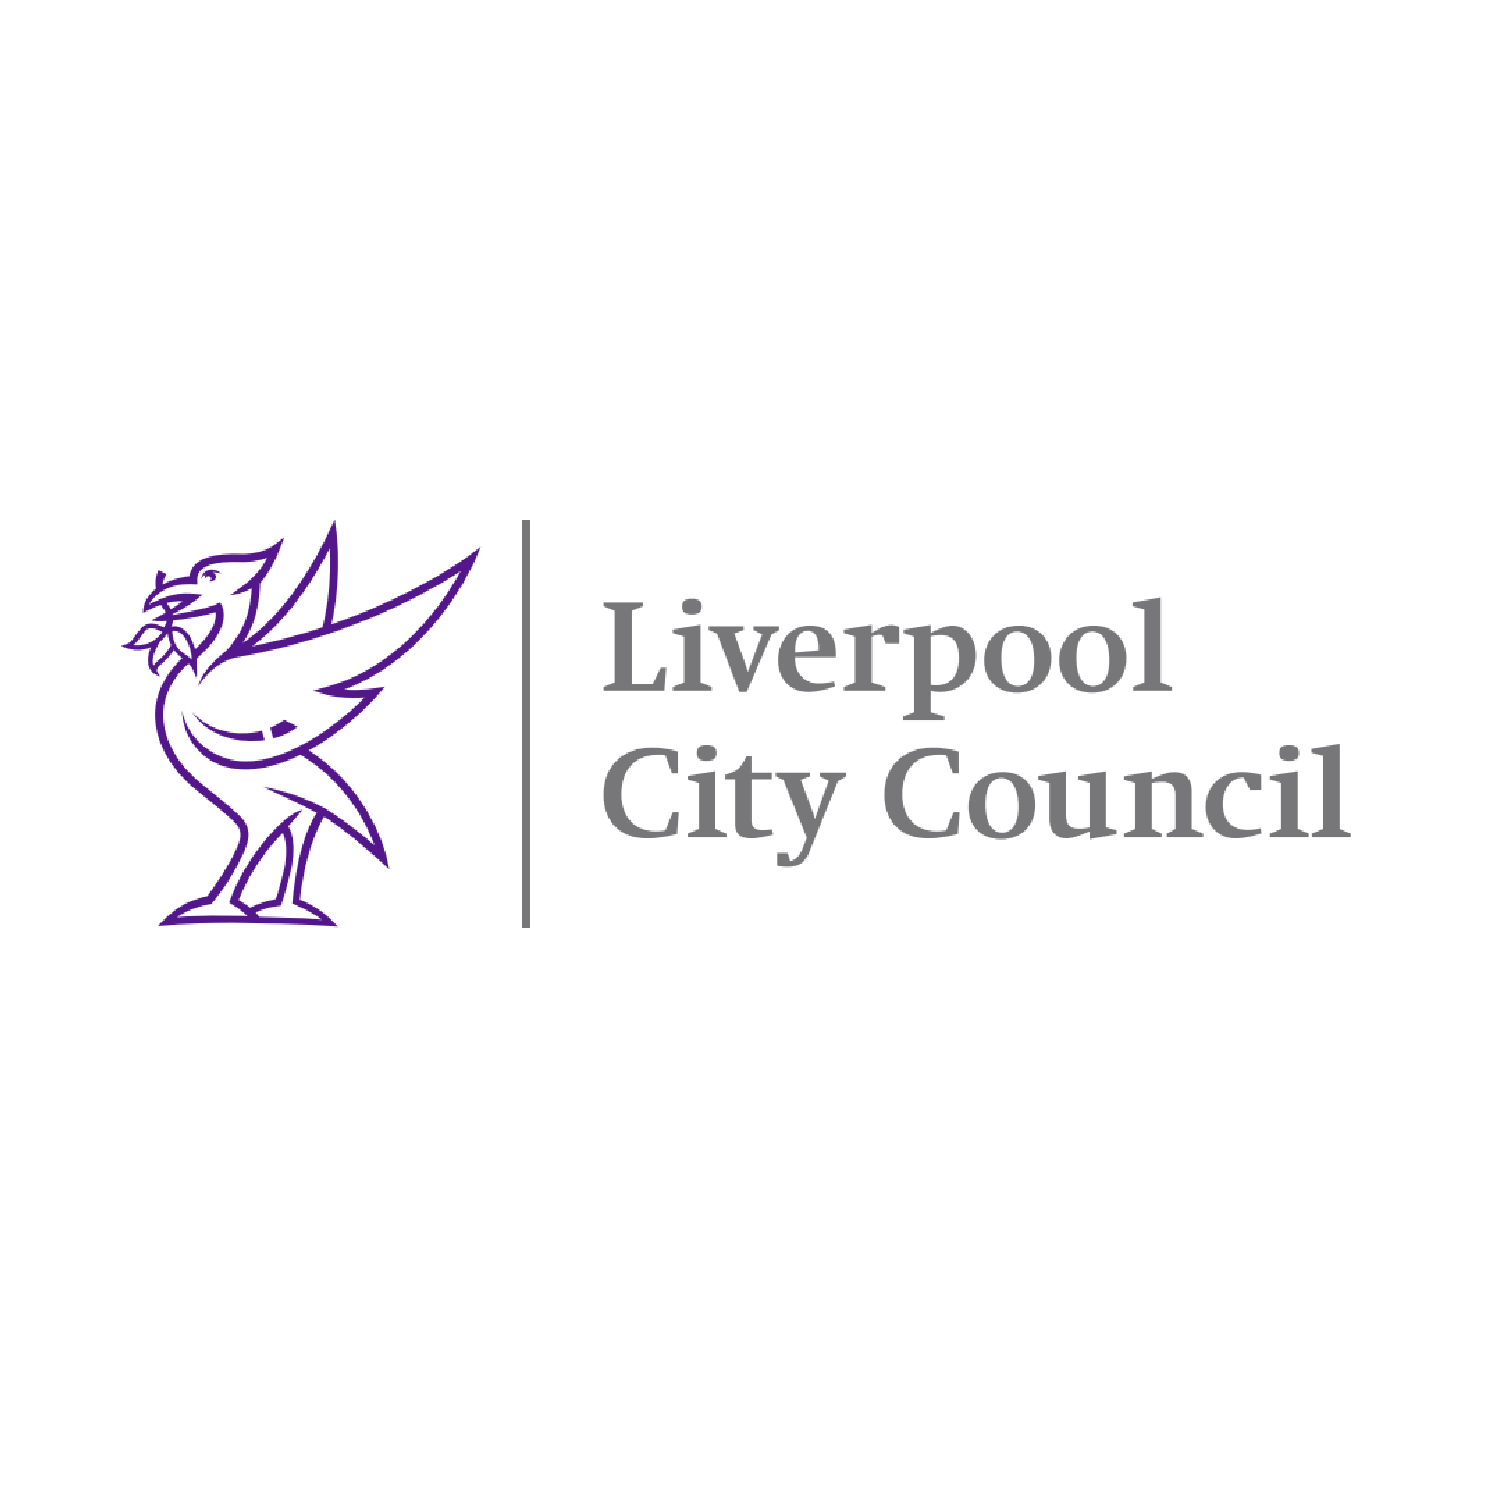 liverpool city council logo